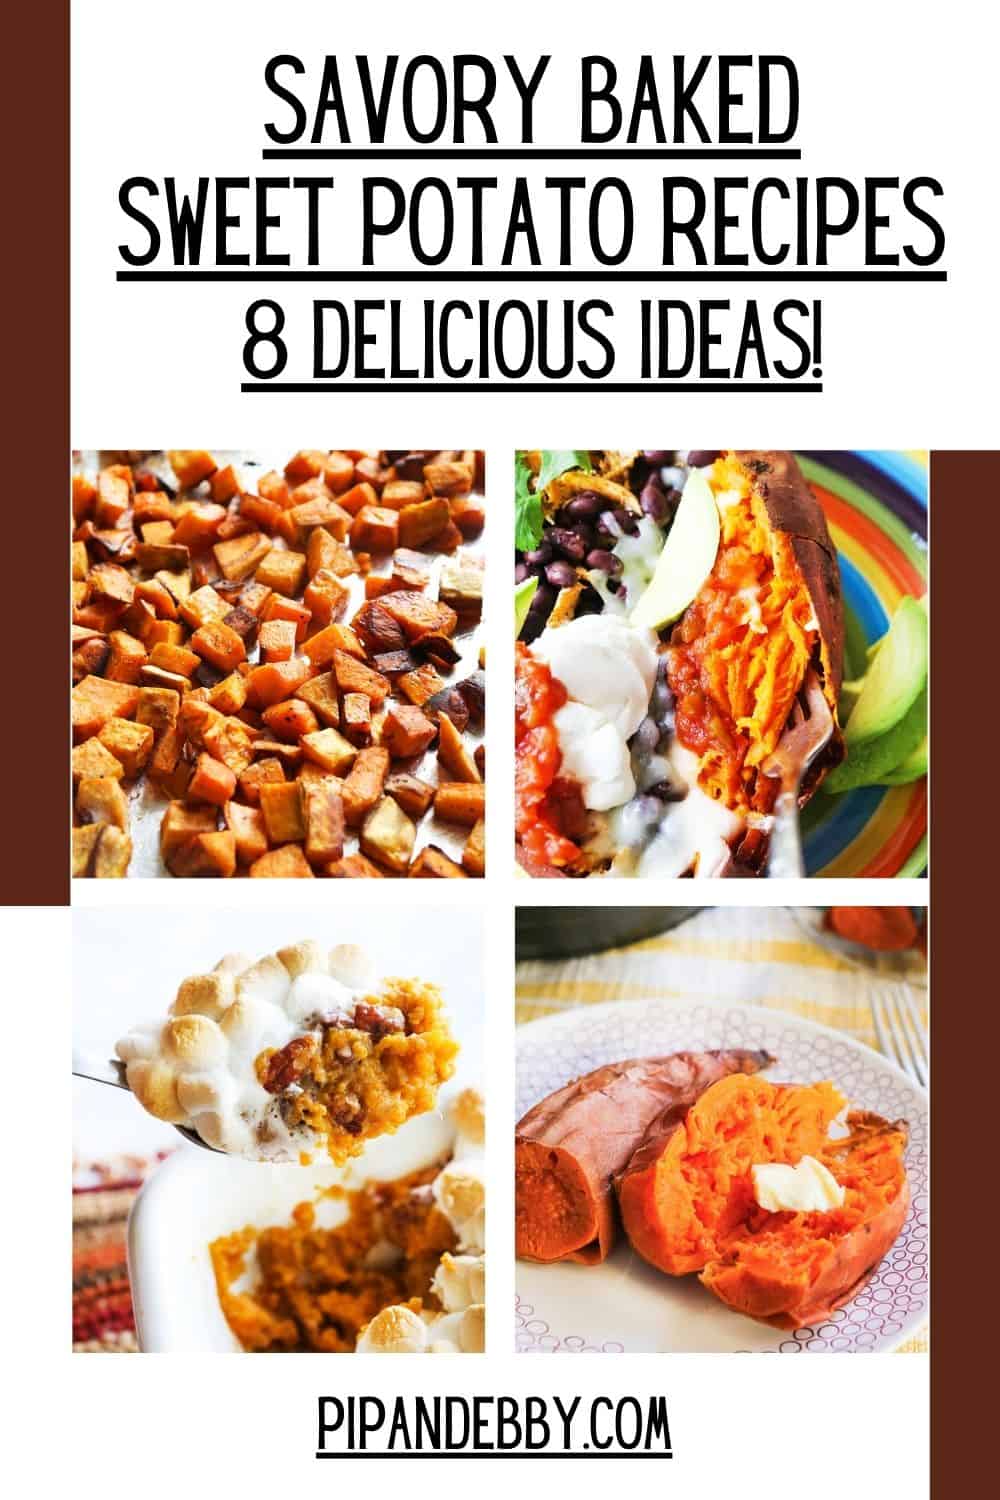 Four sweet potato images with text reading, "Savory baked sweet potato recipes: 8 delicious ideas!"